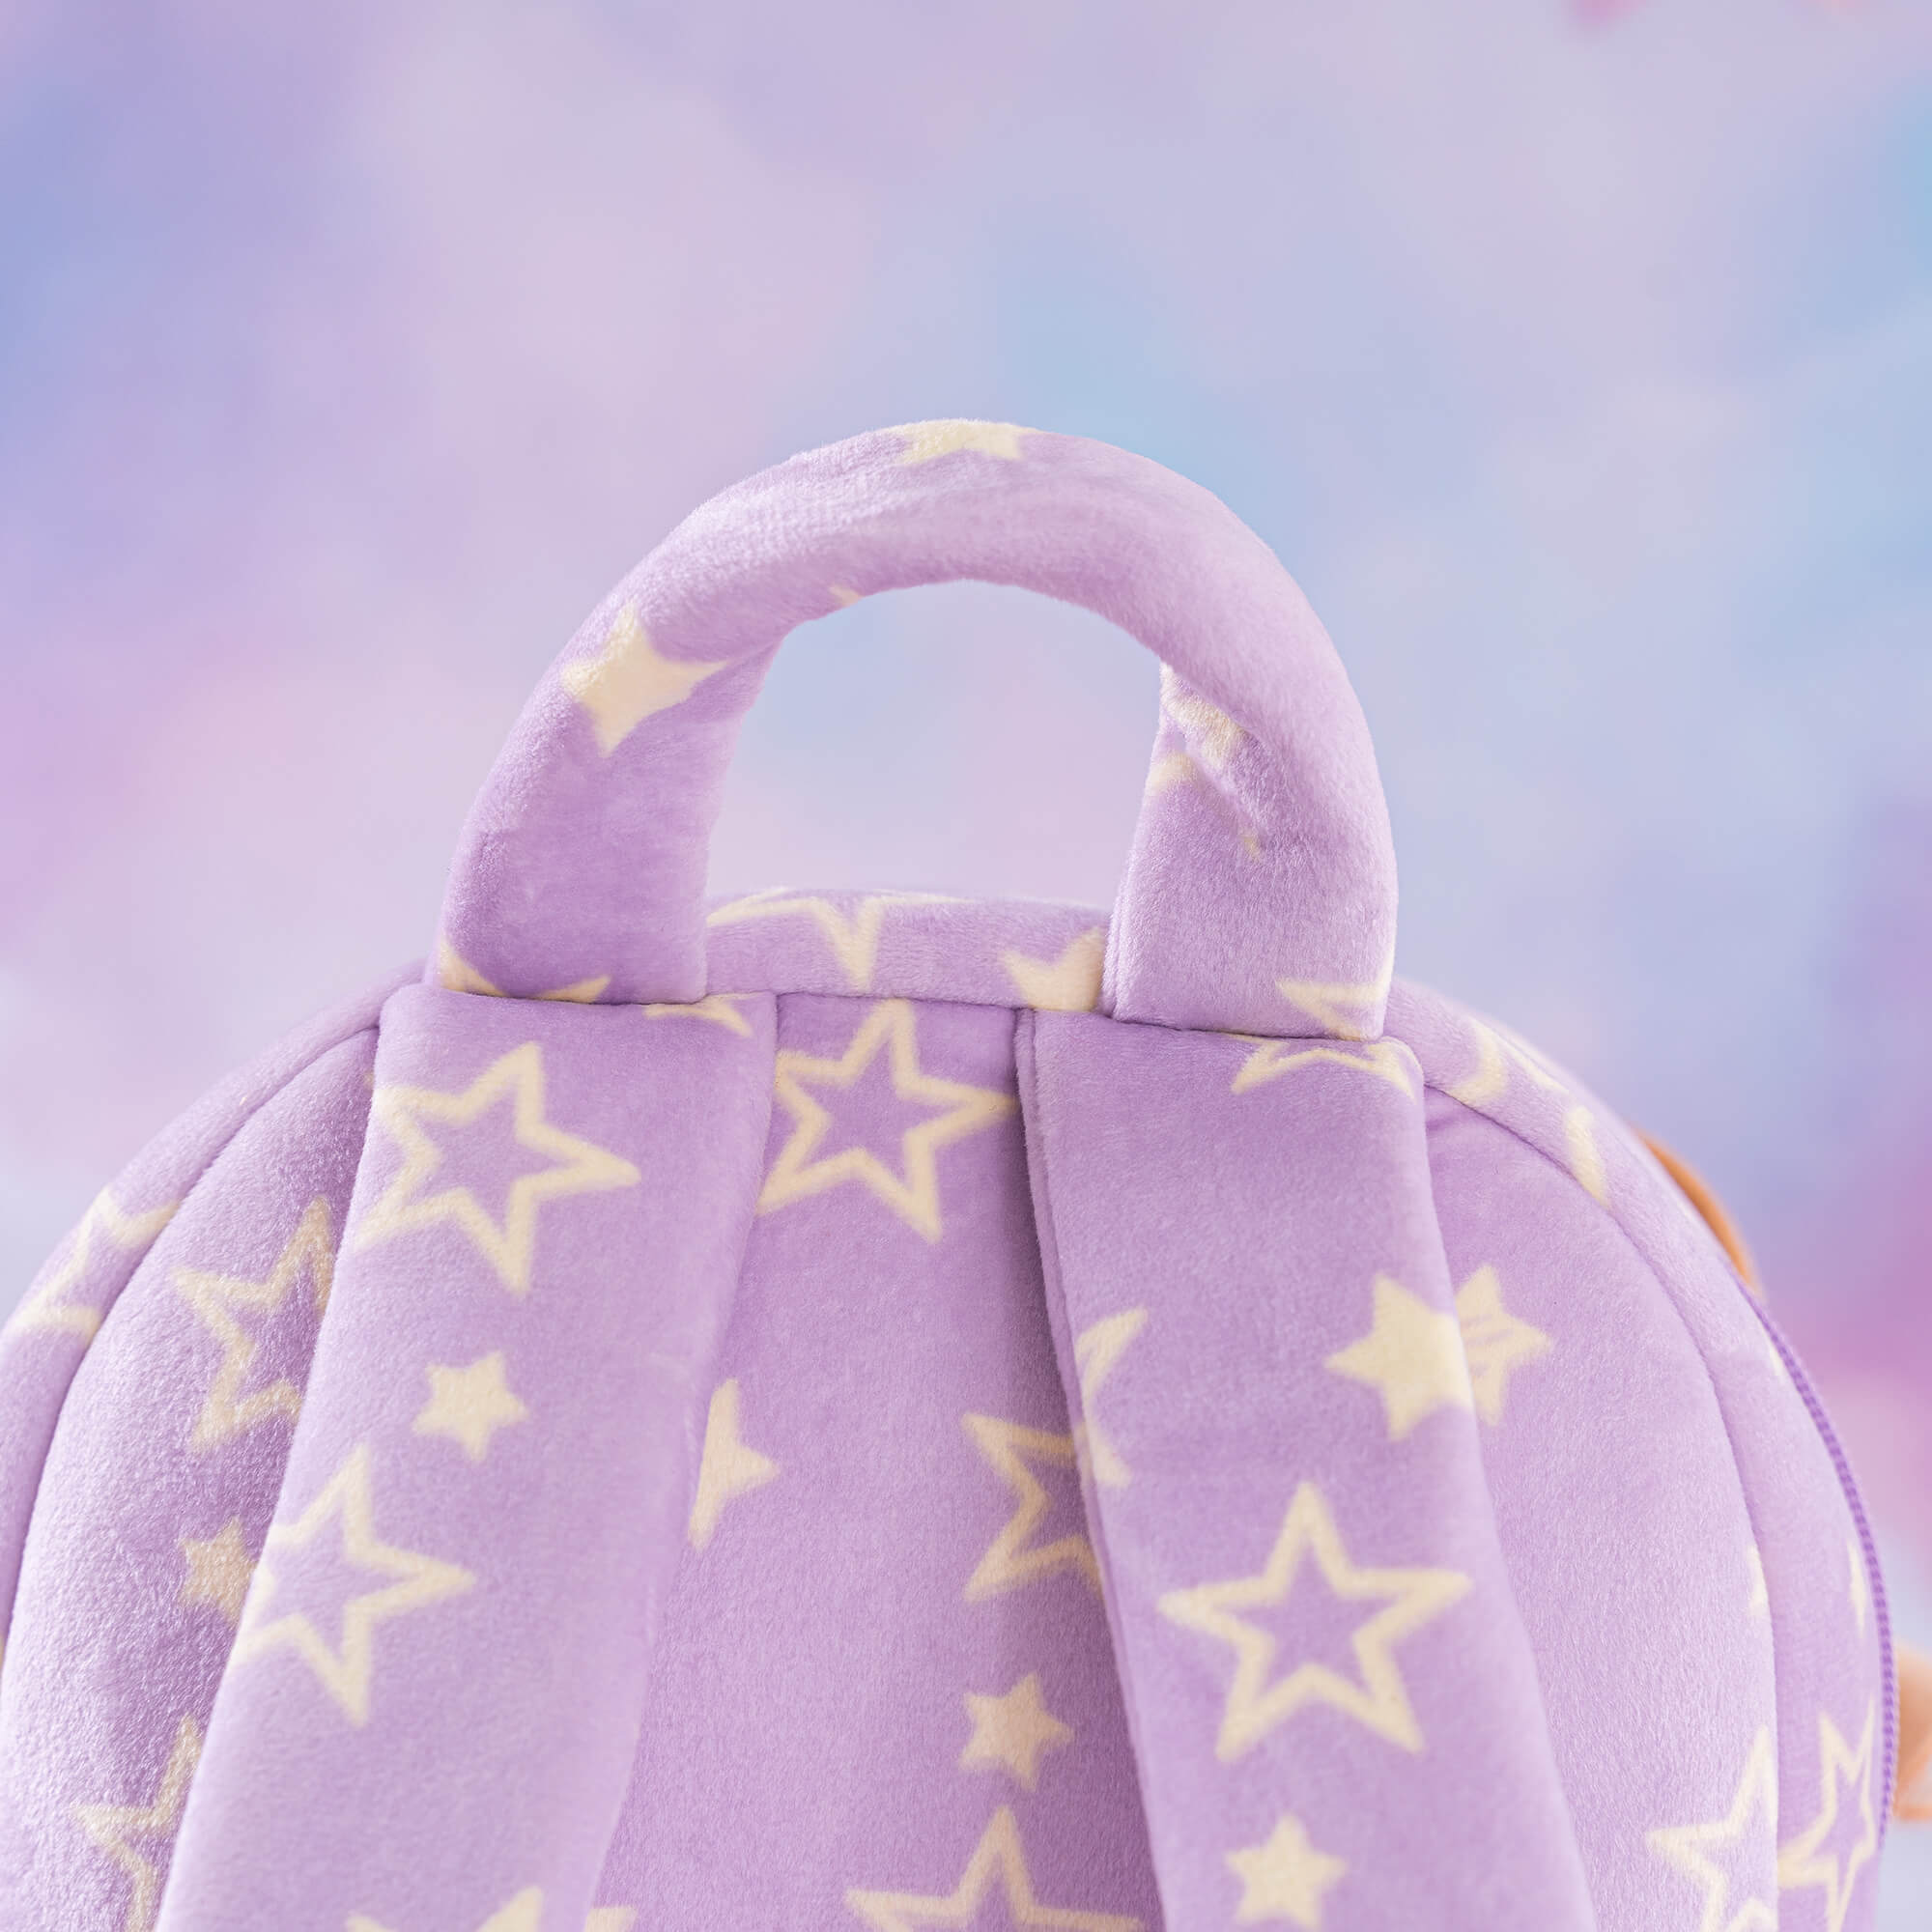 Gloveleya 9-inch Personalized Plush Curly Star Dolls Backpack Purple